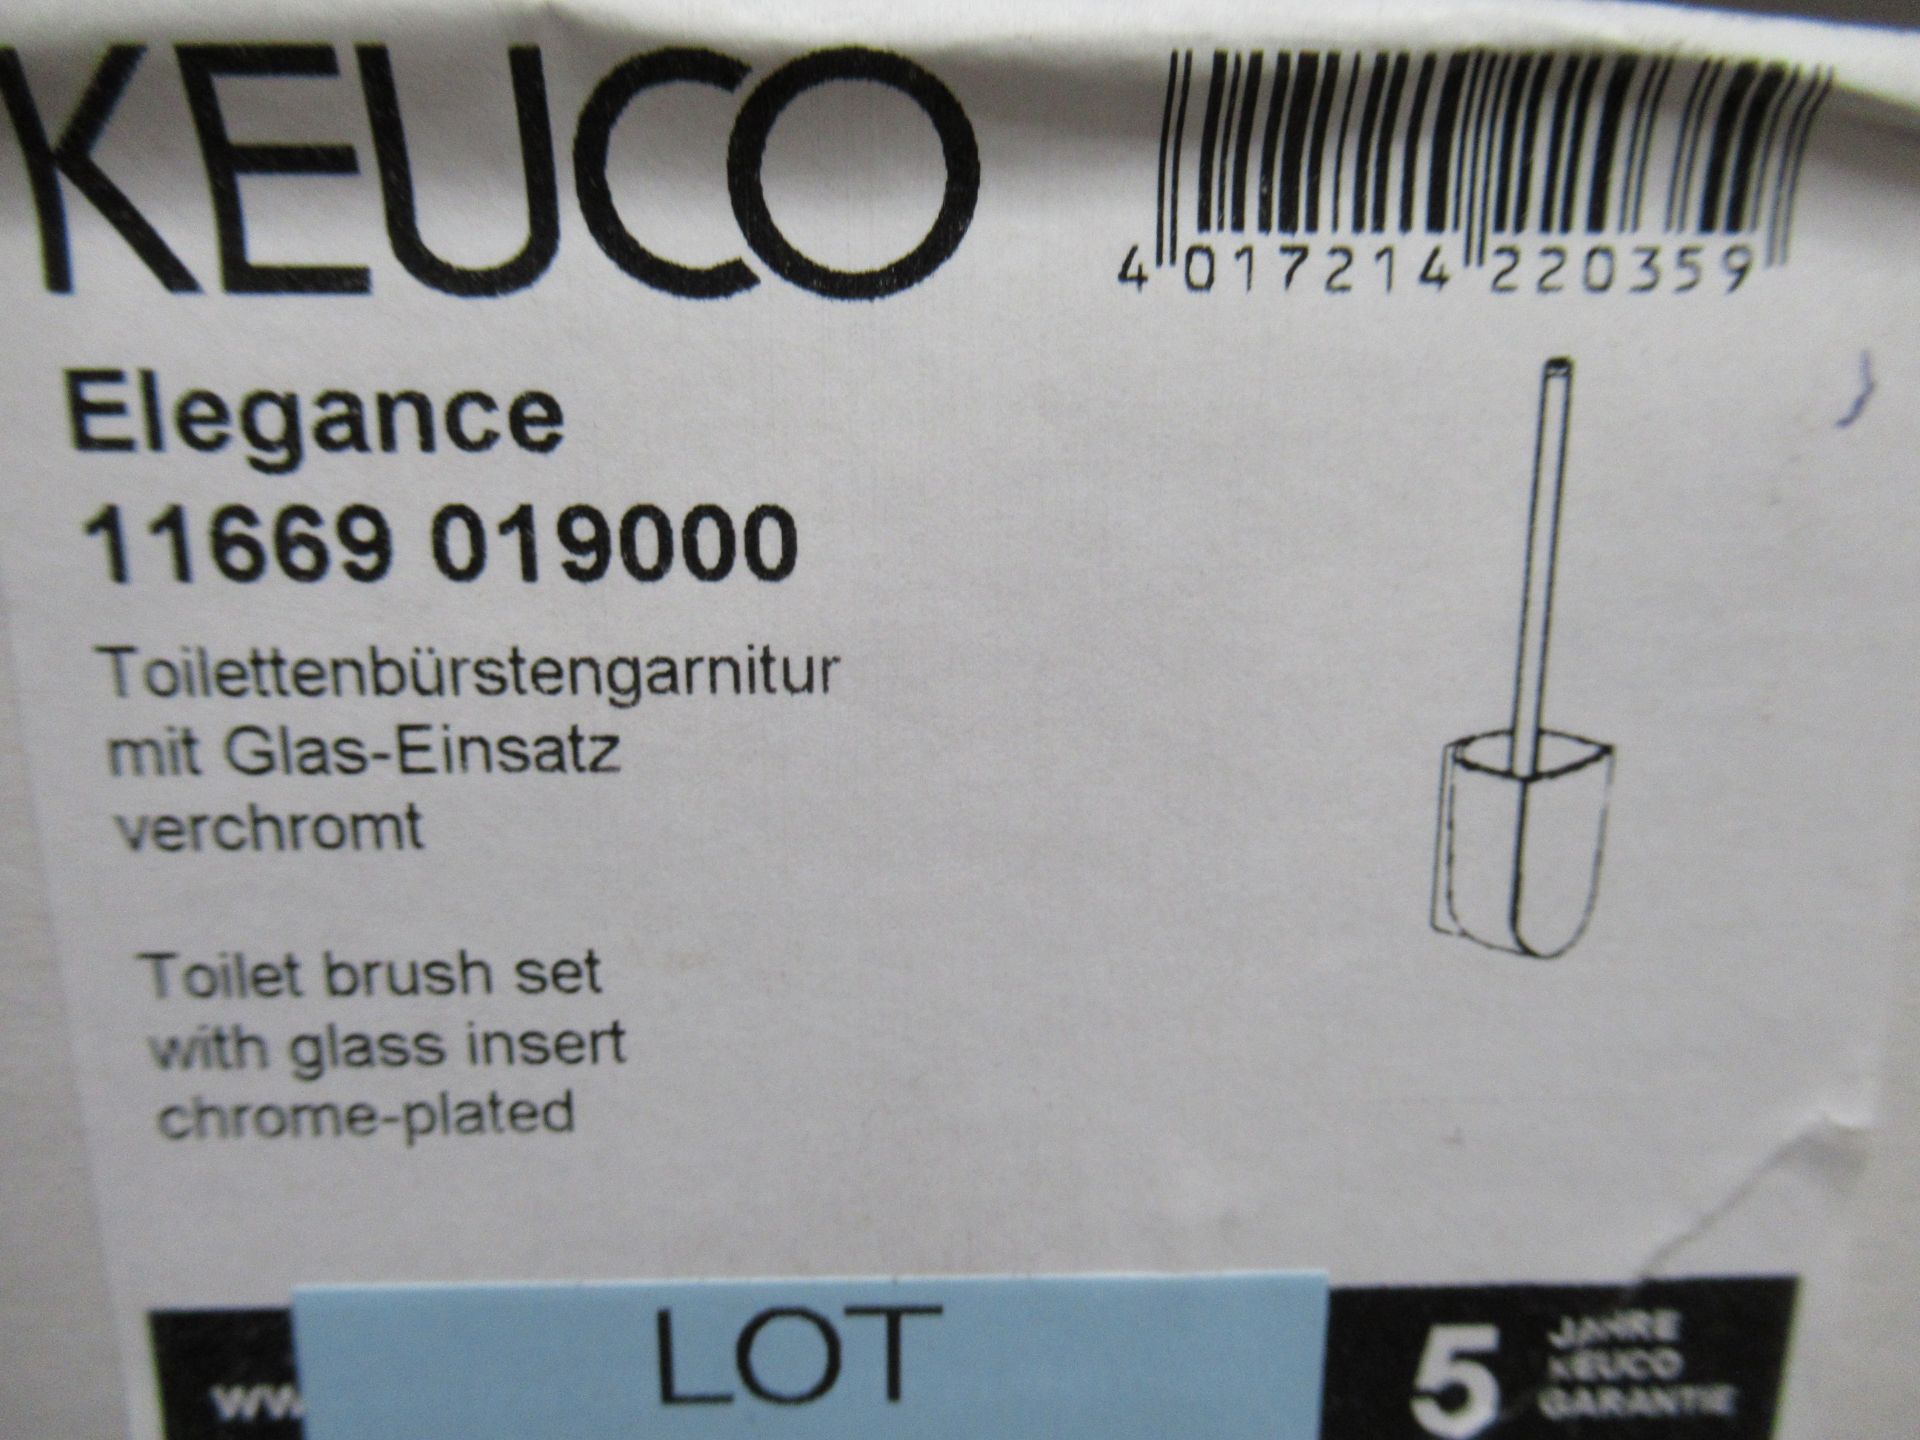 2 x Keuco Elegance Toilet Brush Set Chrome Plated, P/N 11669-019000 - Image 2 of 2